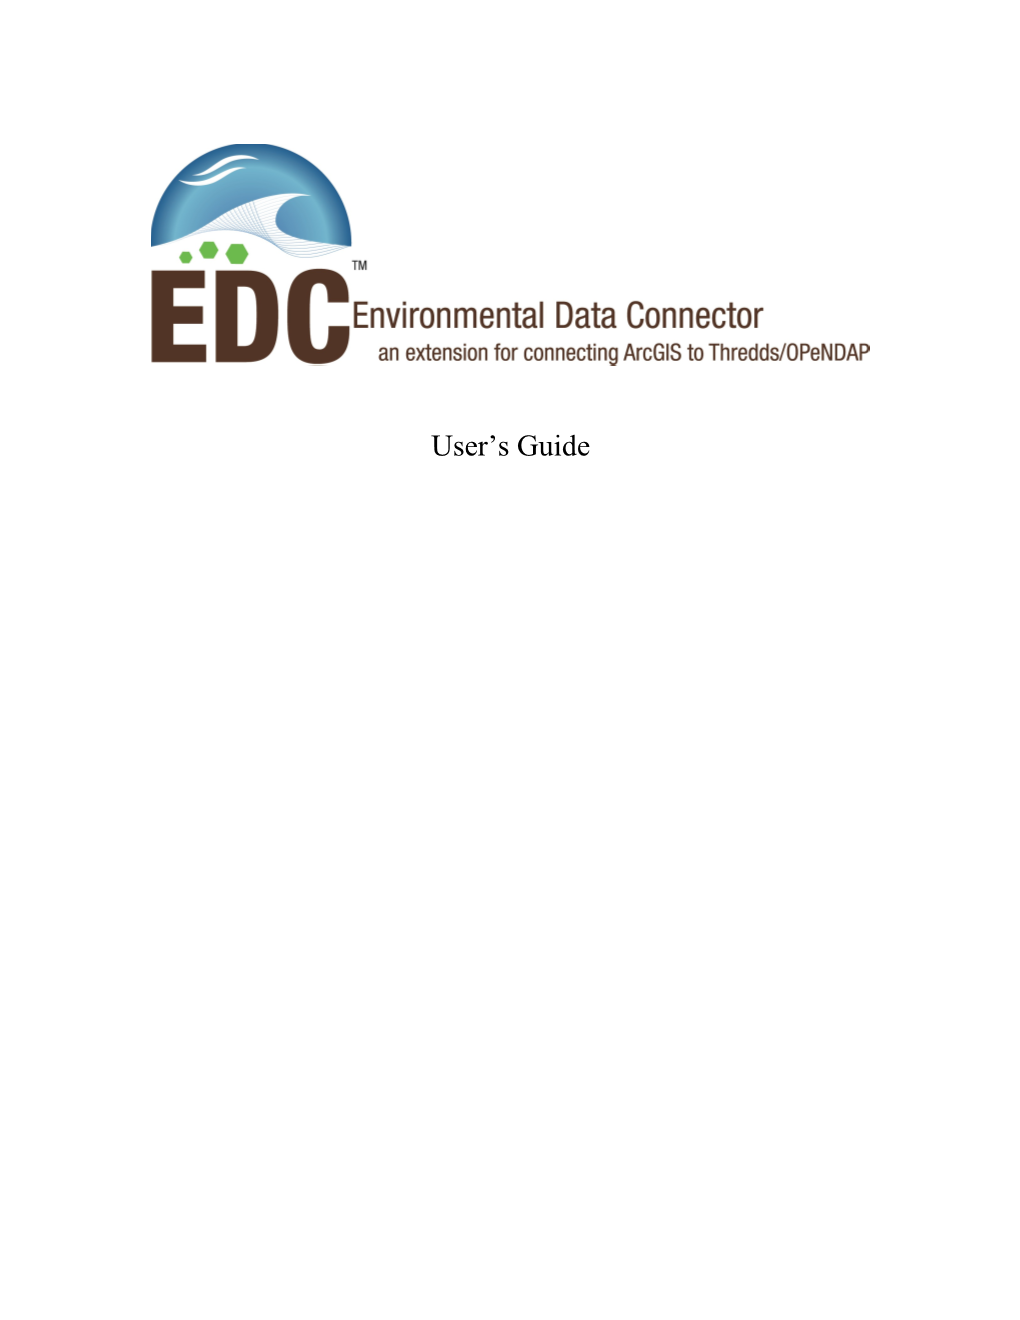 Environmental Data Connector User's Guide